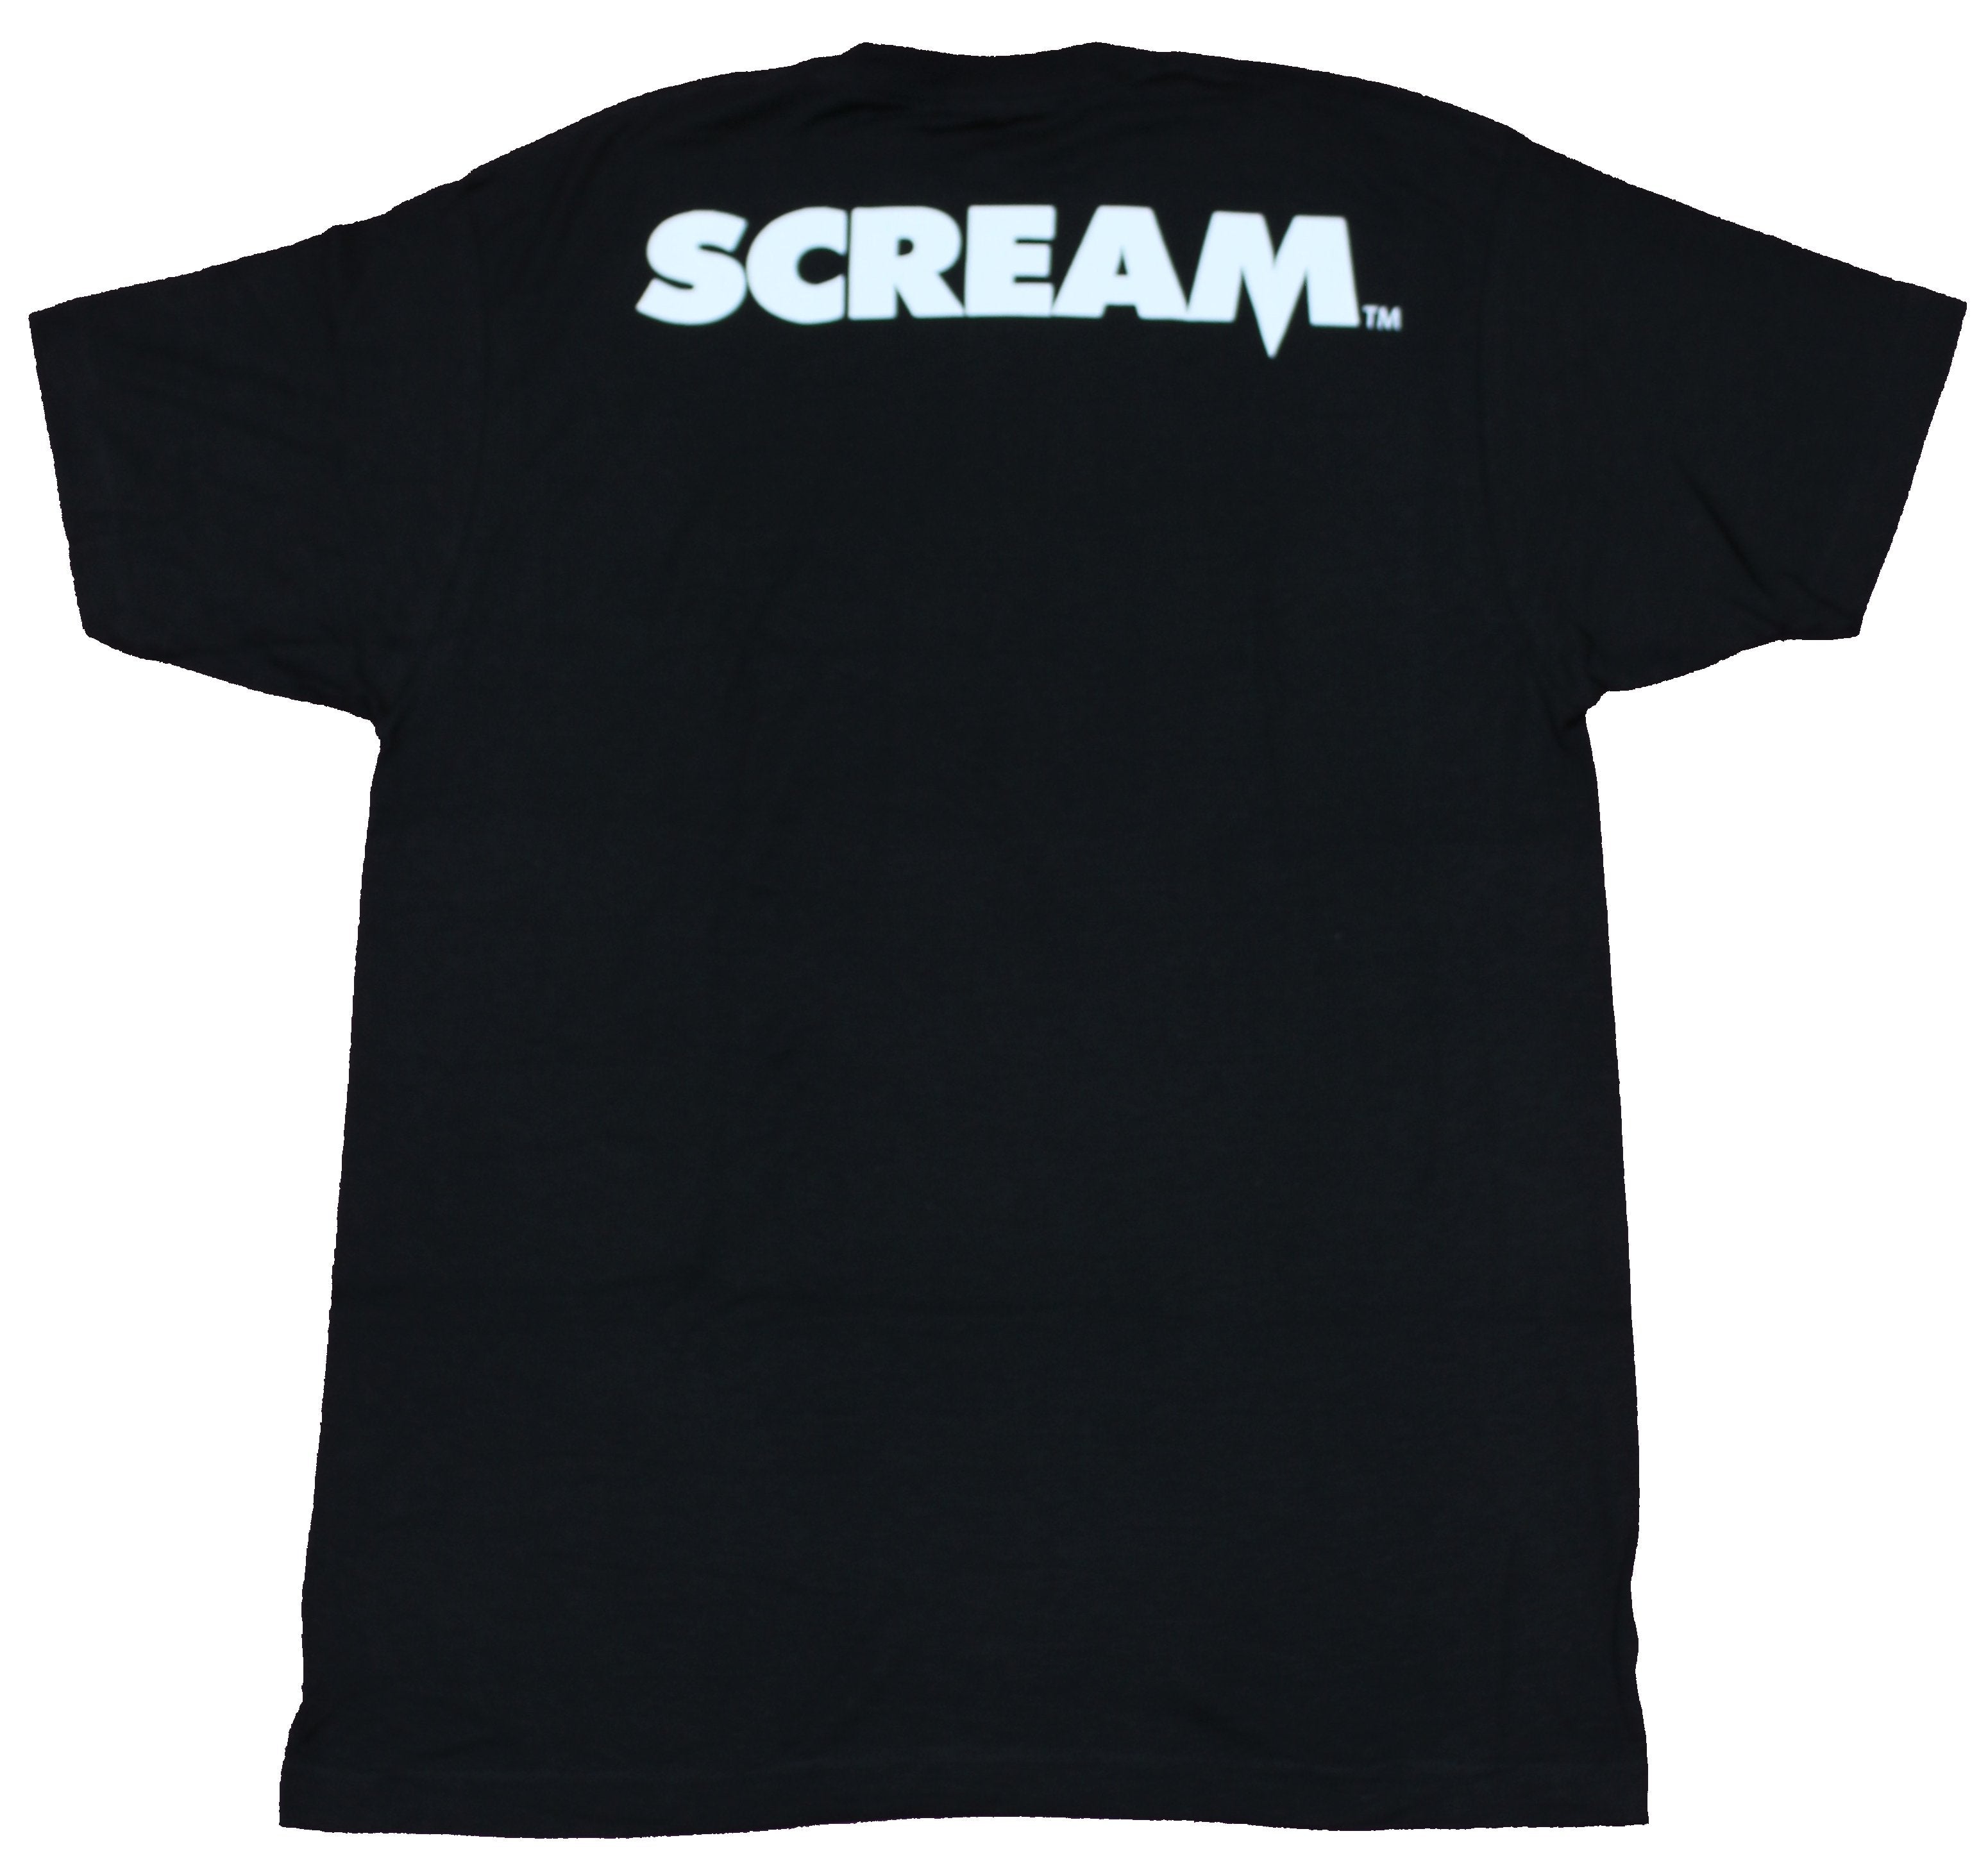 Scream Mens T-Shirt - Kanji Scream Black & White Poster Image